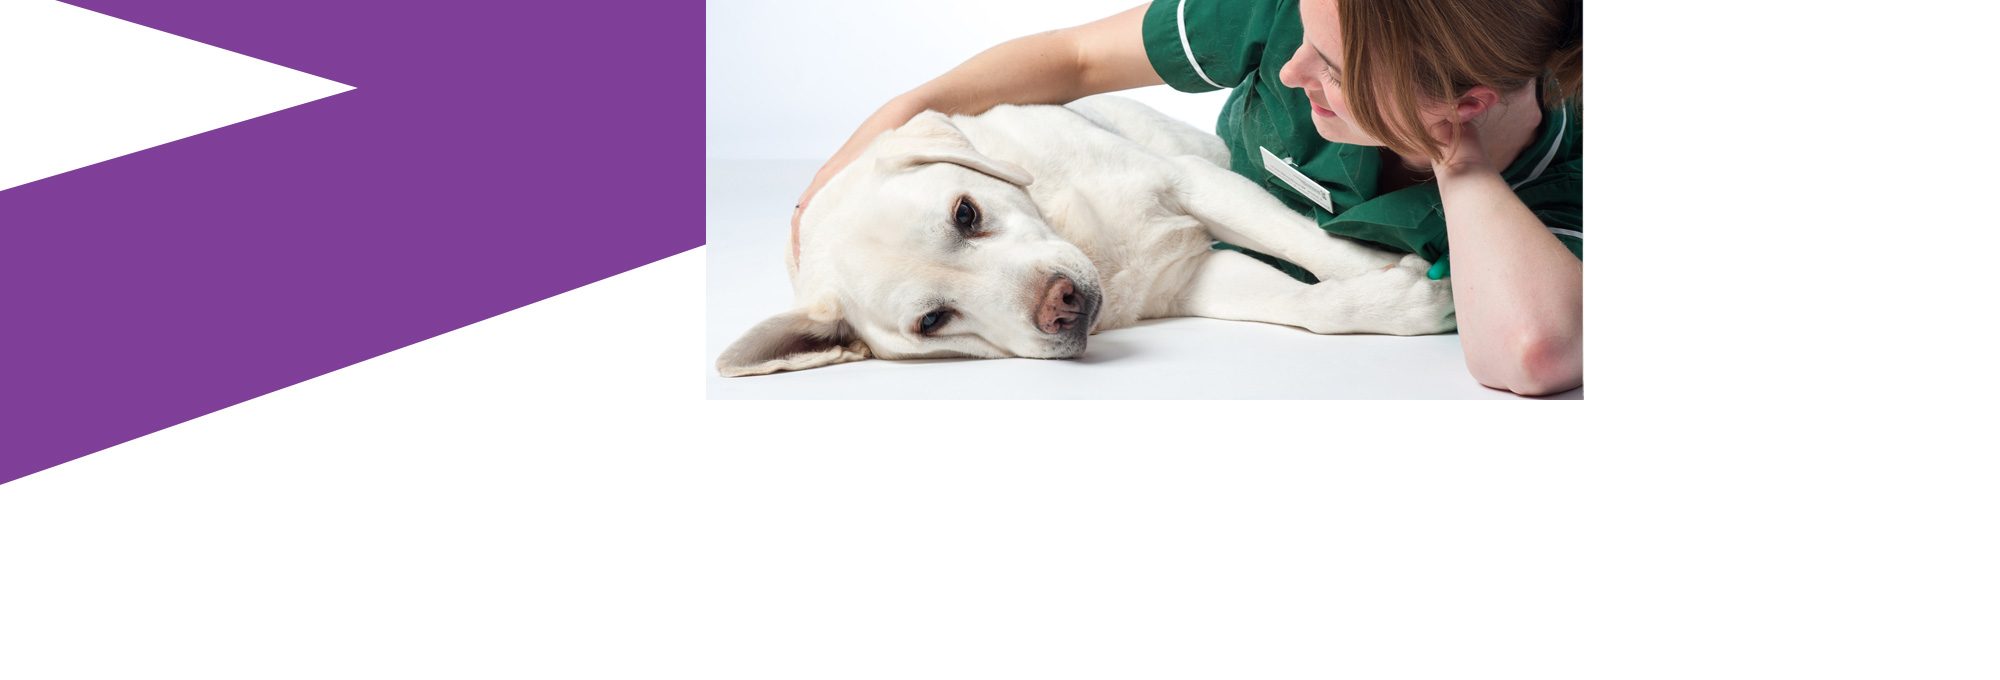 sainsbury's dog flea treatment